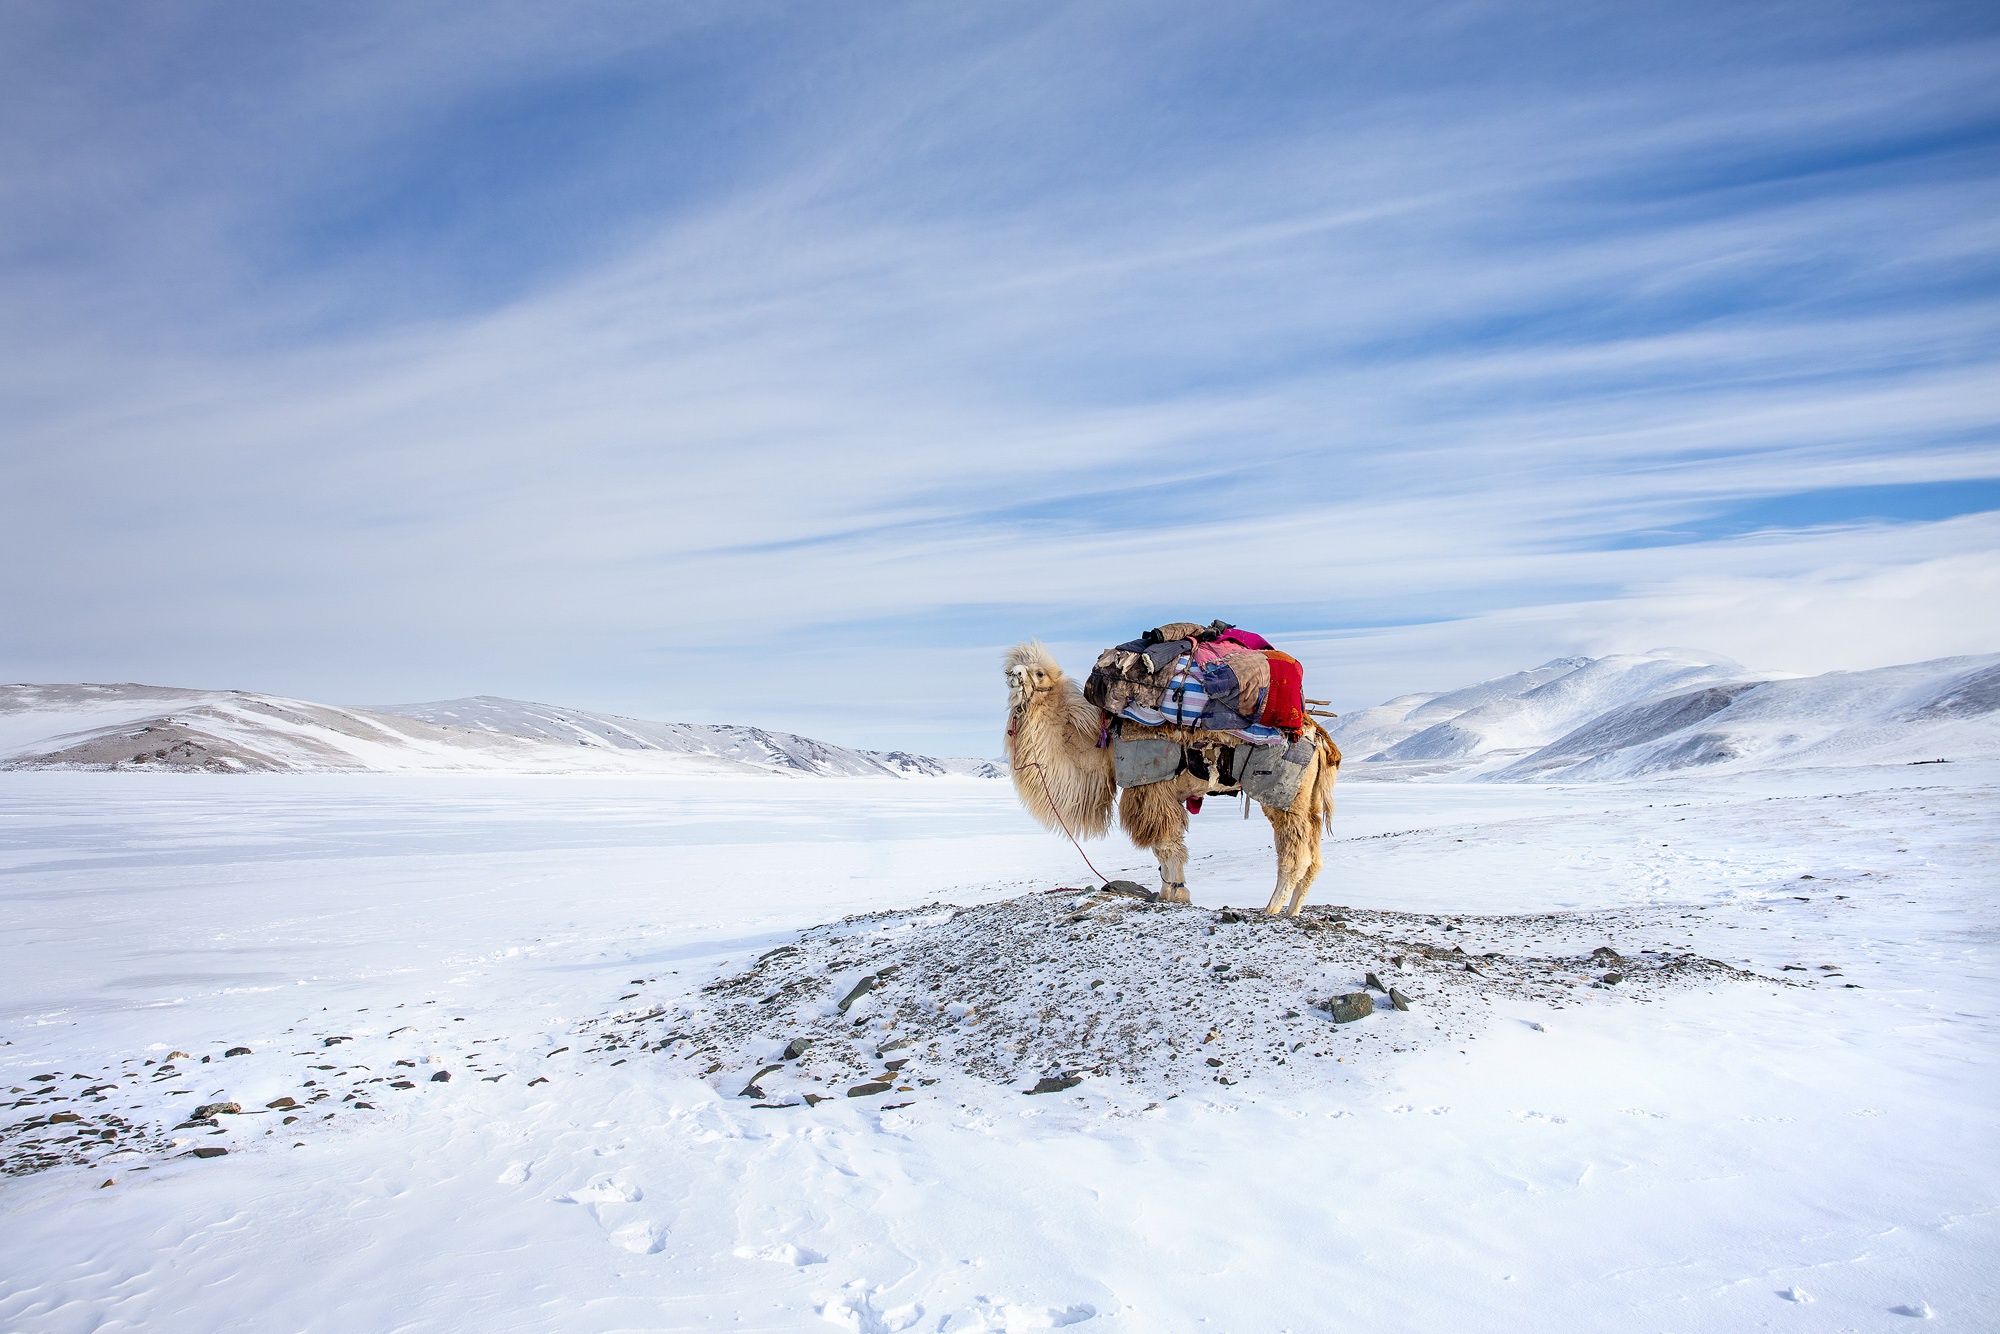 General 2000x1334 animals camels winter cold sky landscape snow